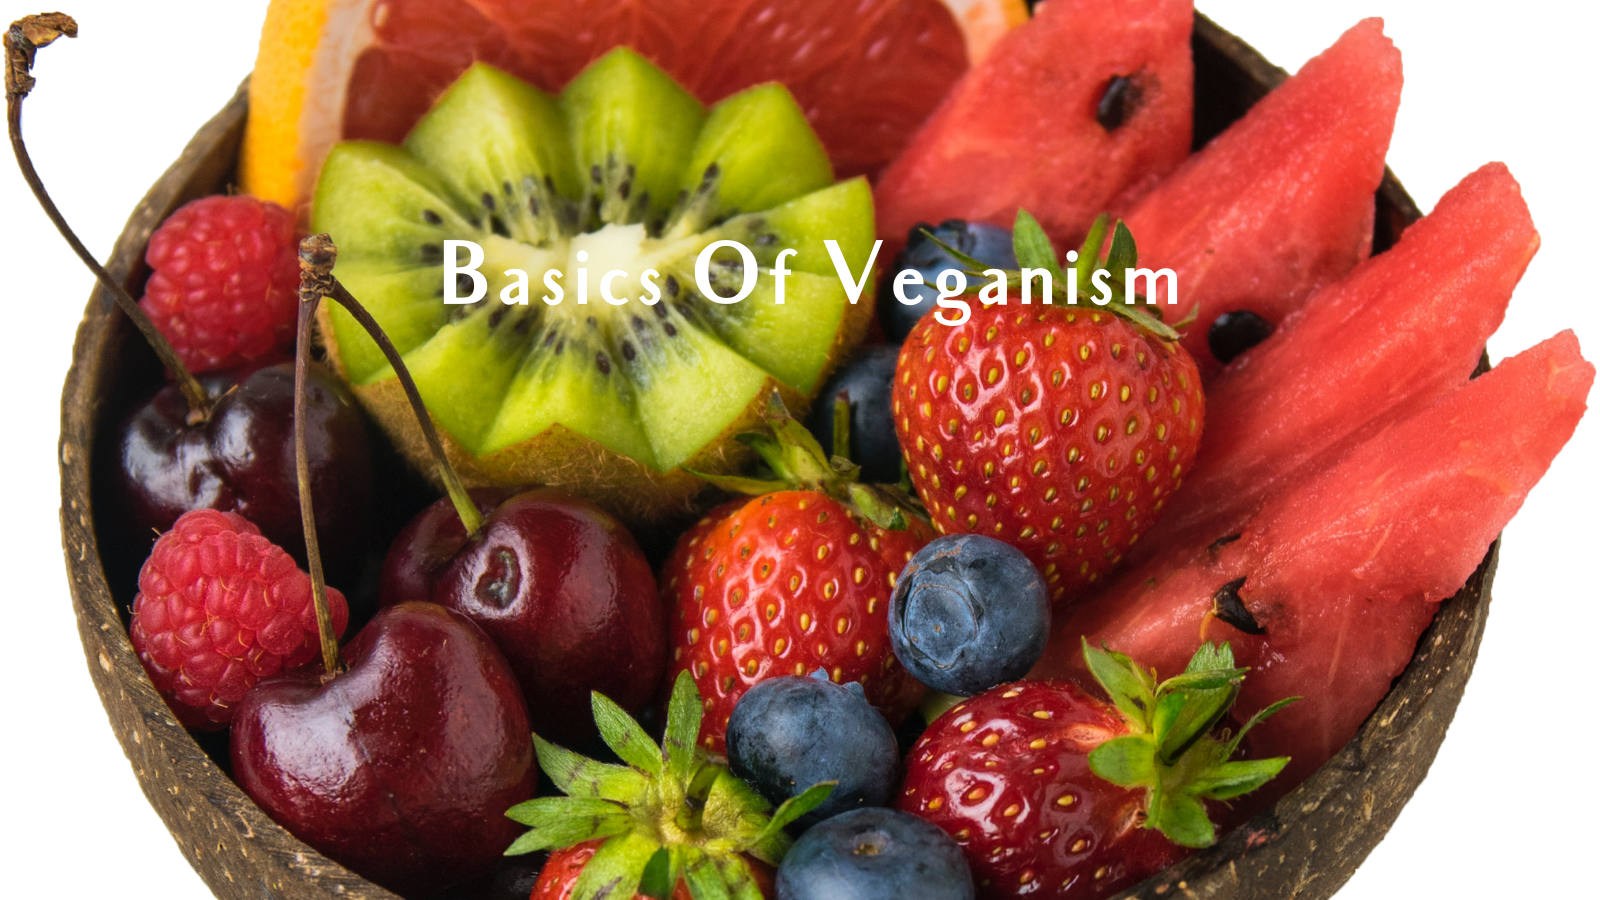 Basics Of Veganism